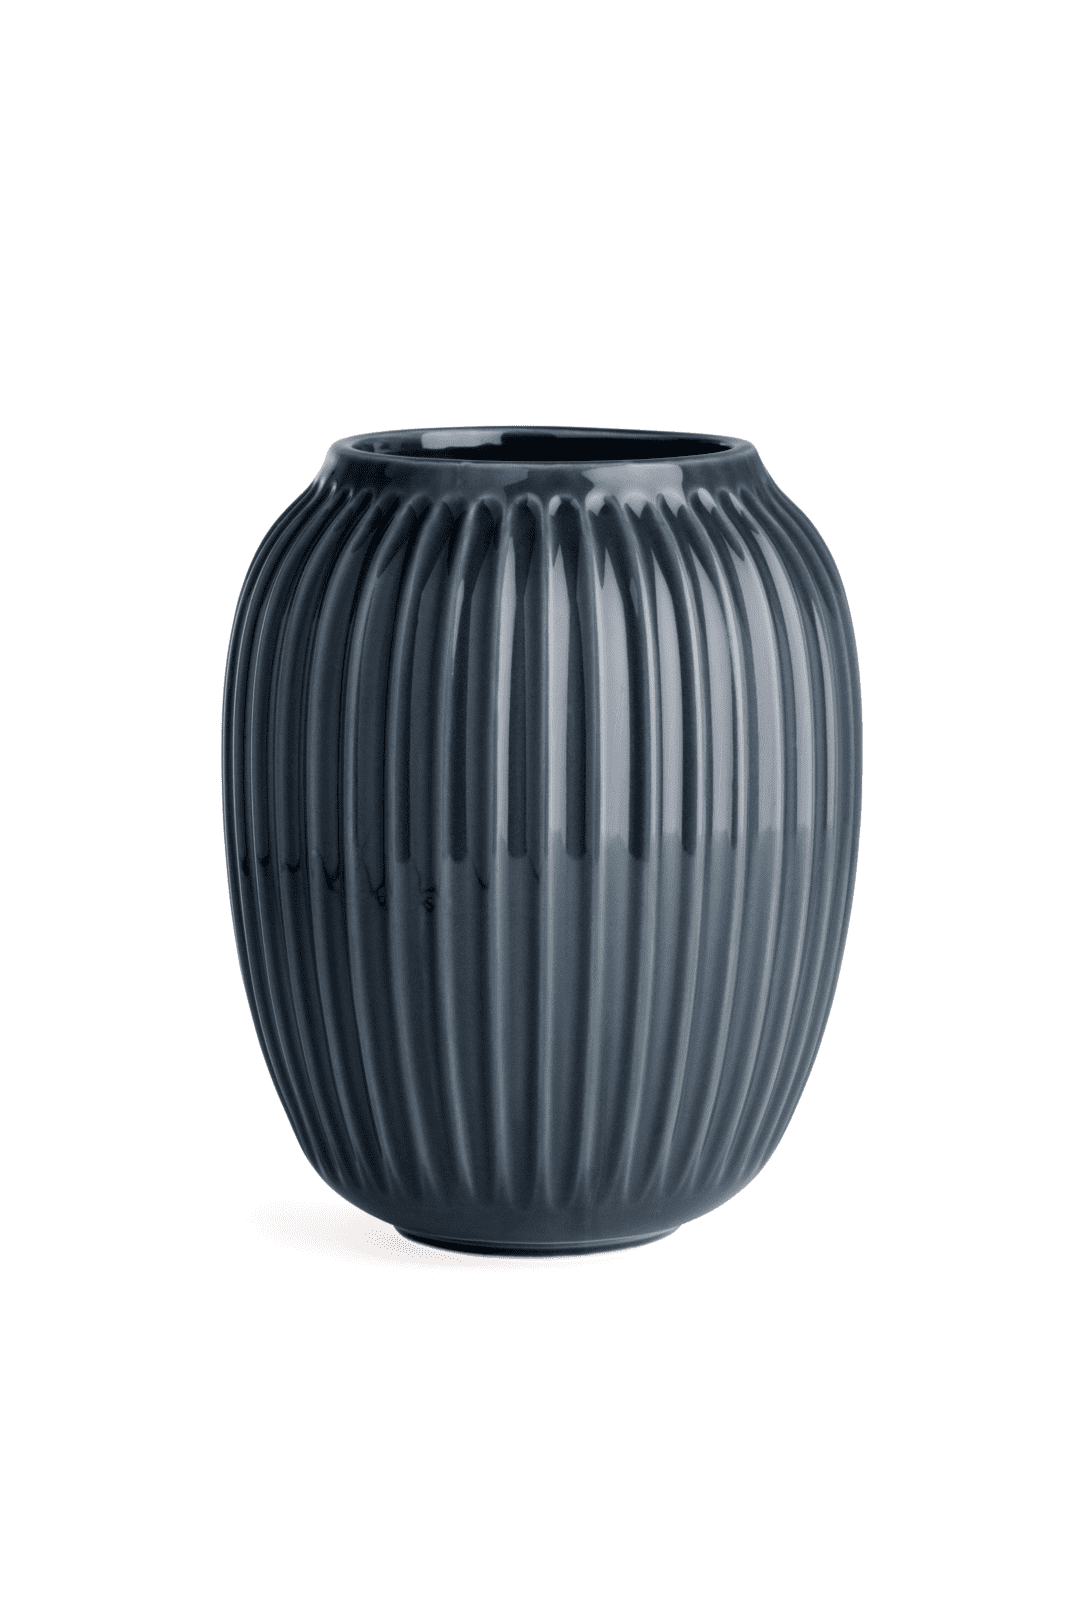 Hammershøi Vase anthracite grey H21 cm  H: 8.3" Ø: 6.7"